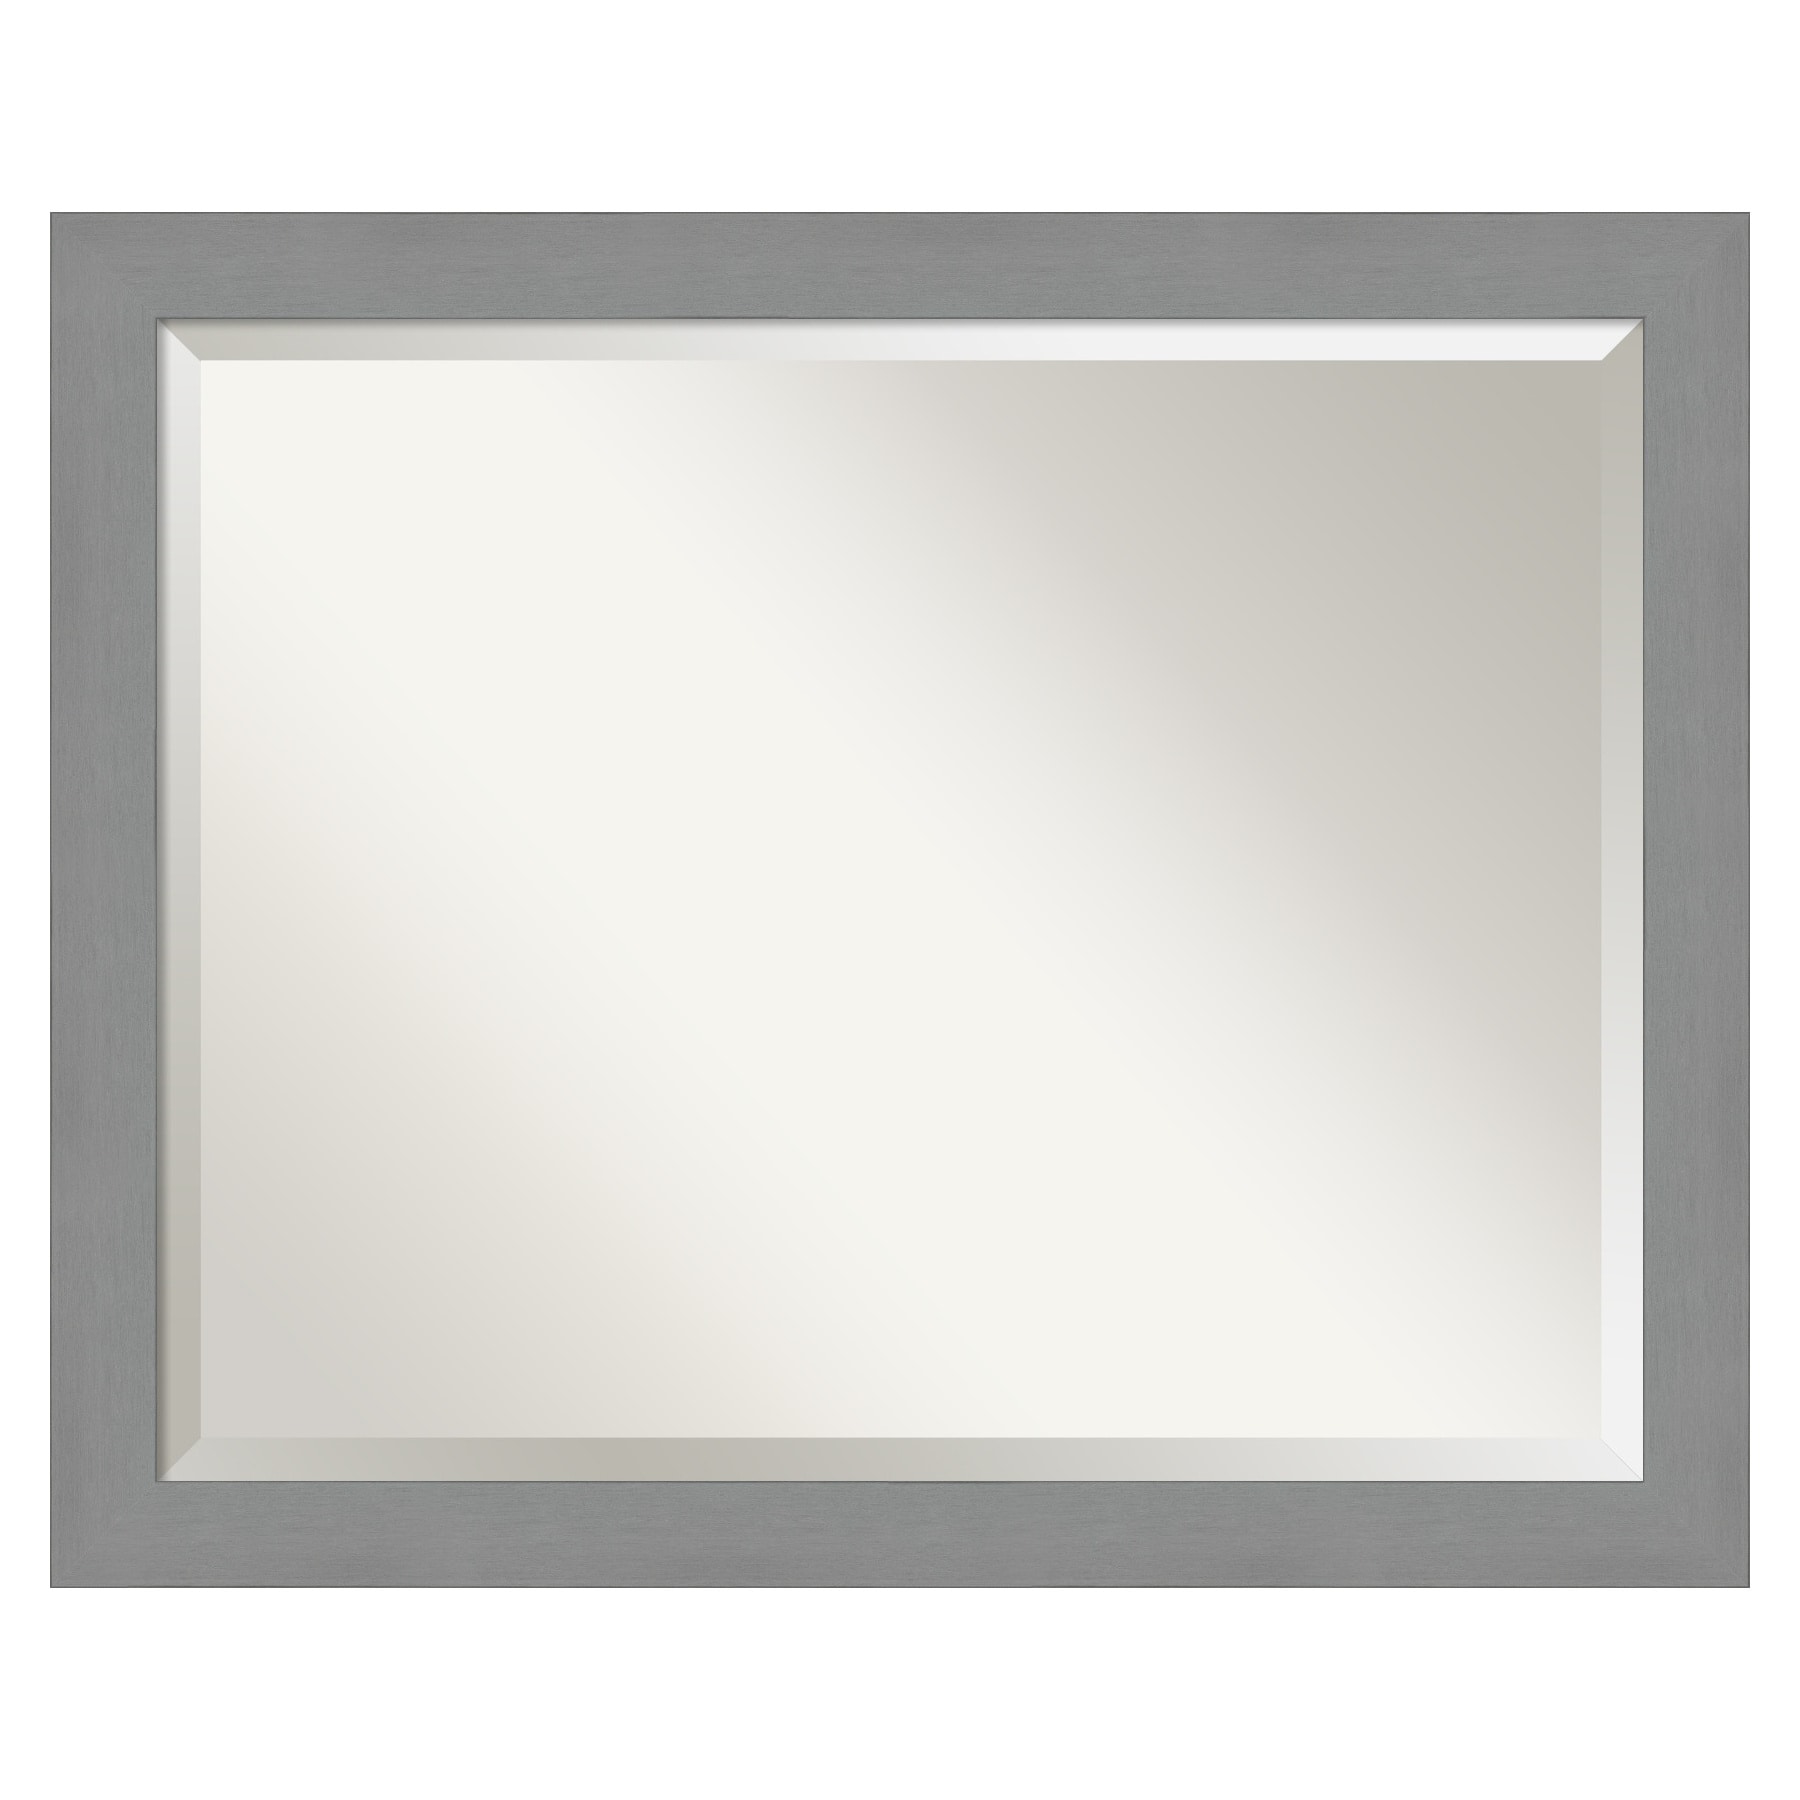 Amanti Art Brushed Nickel Frame 31.5-in W x 25.5-in H Brushed Silver Rectangular Bathroom Vanity Mirror